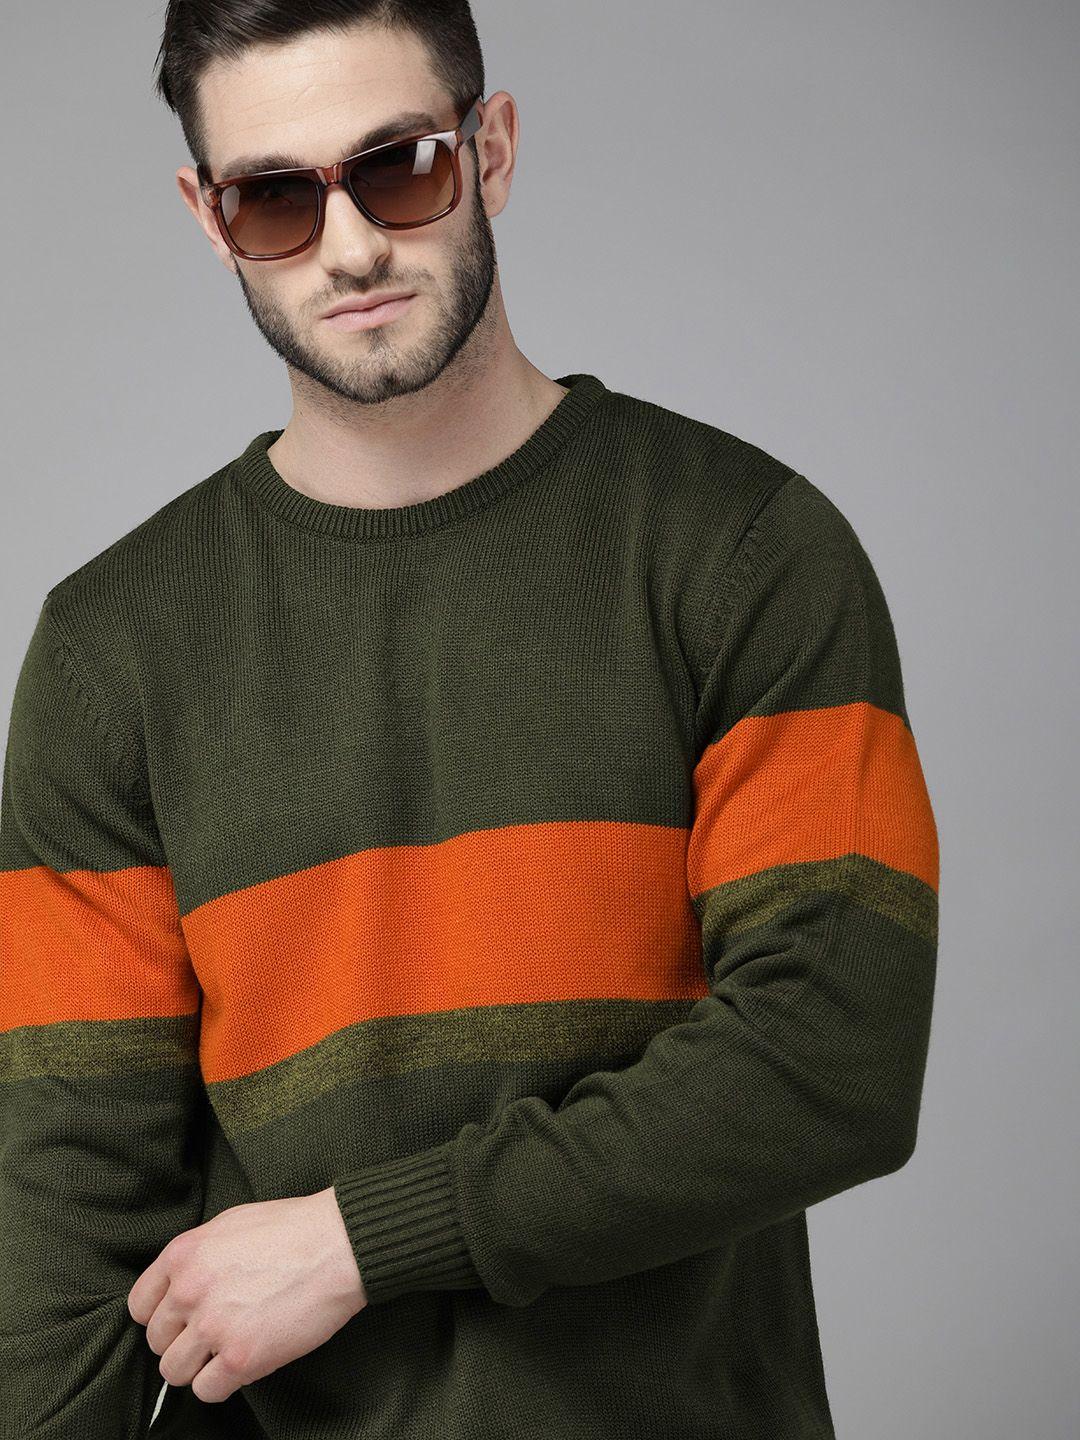 roadster-men-olive-green-&-orange-striped-acrylic-regular-pullover-sweater